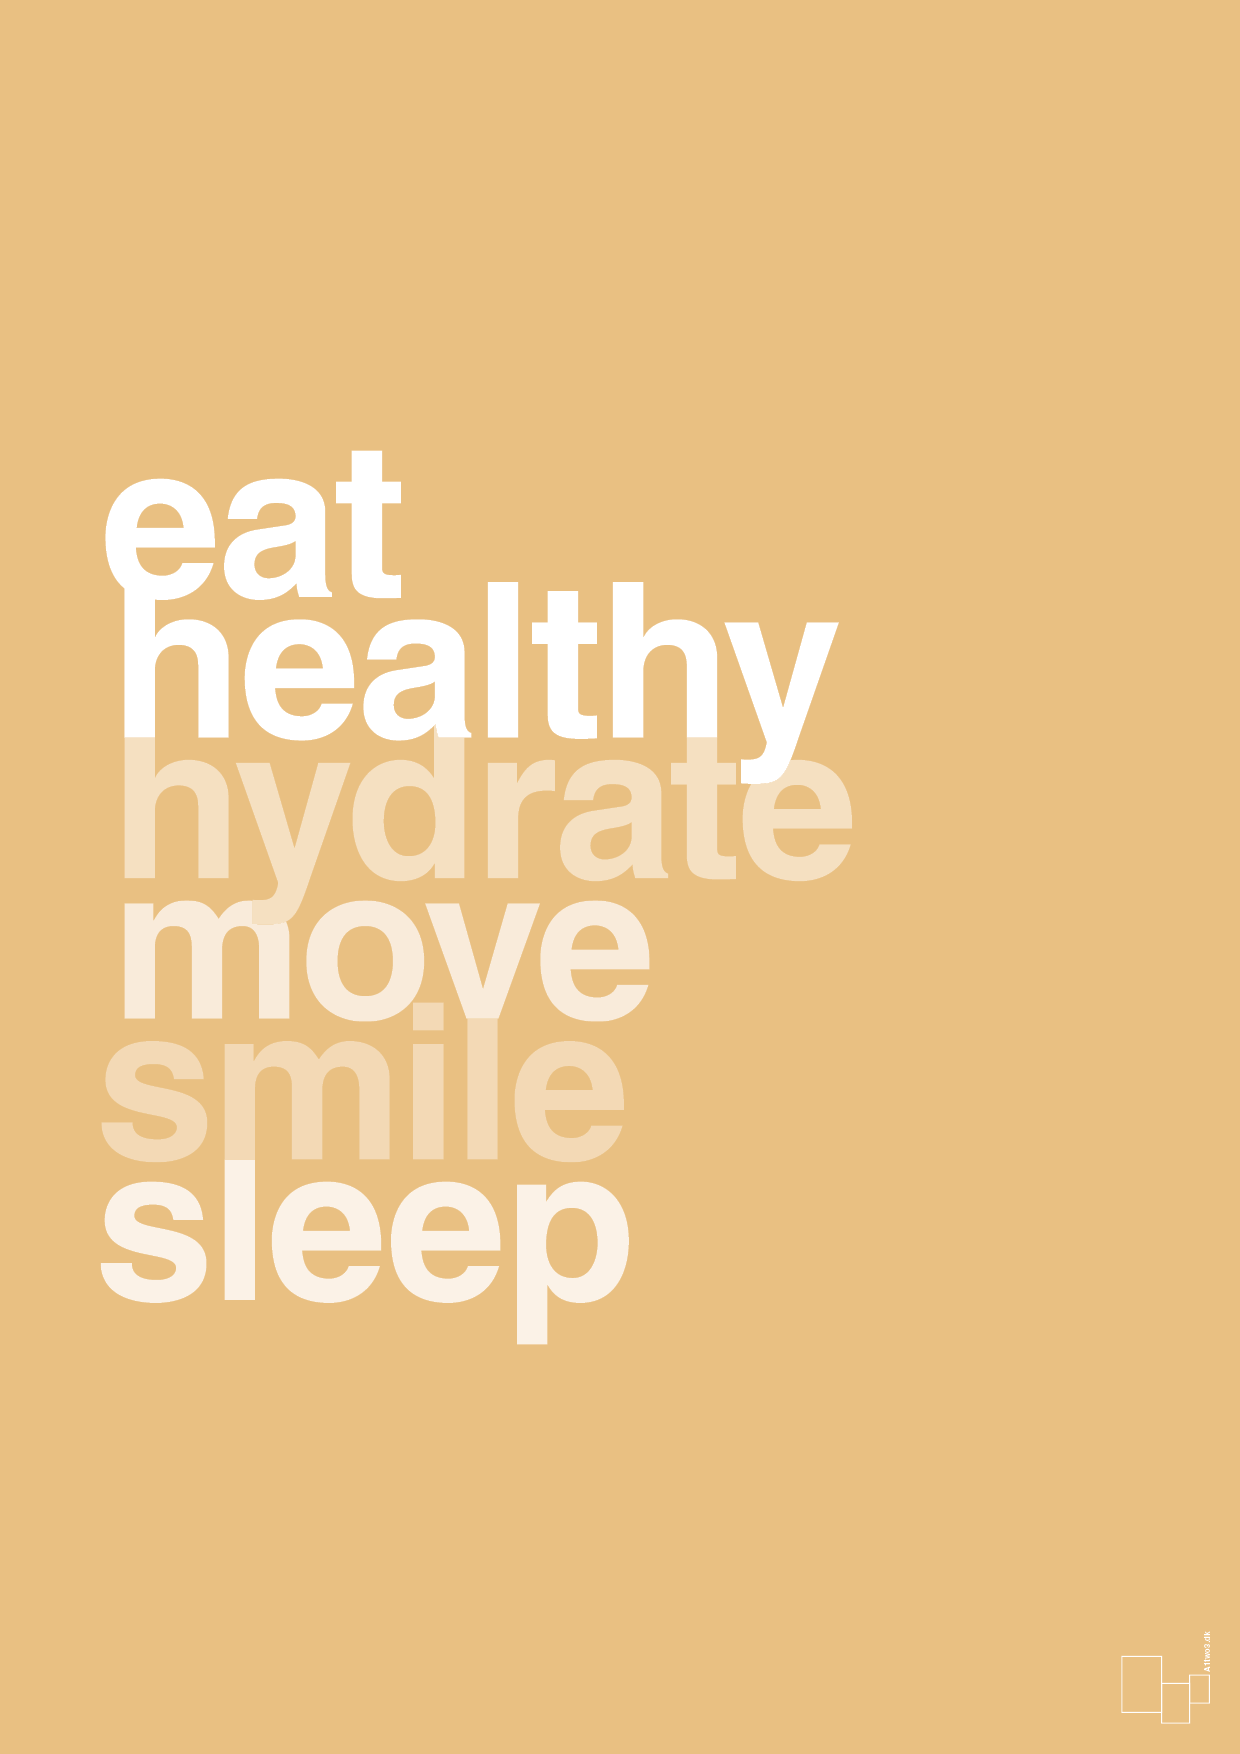 eat healthy hydrate move smile sleep - Plakat med Ordsprog i Charismatic